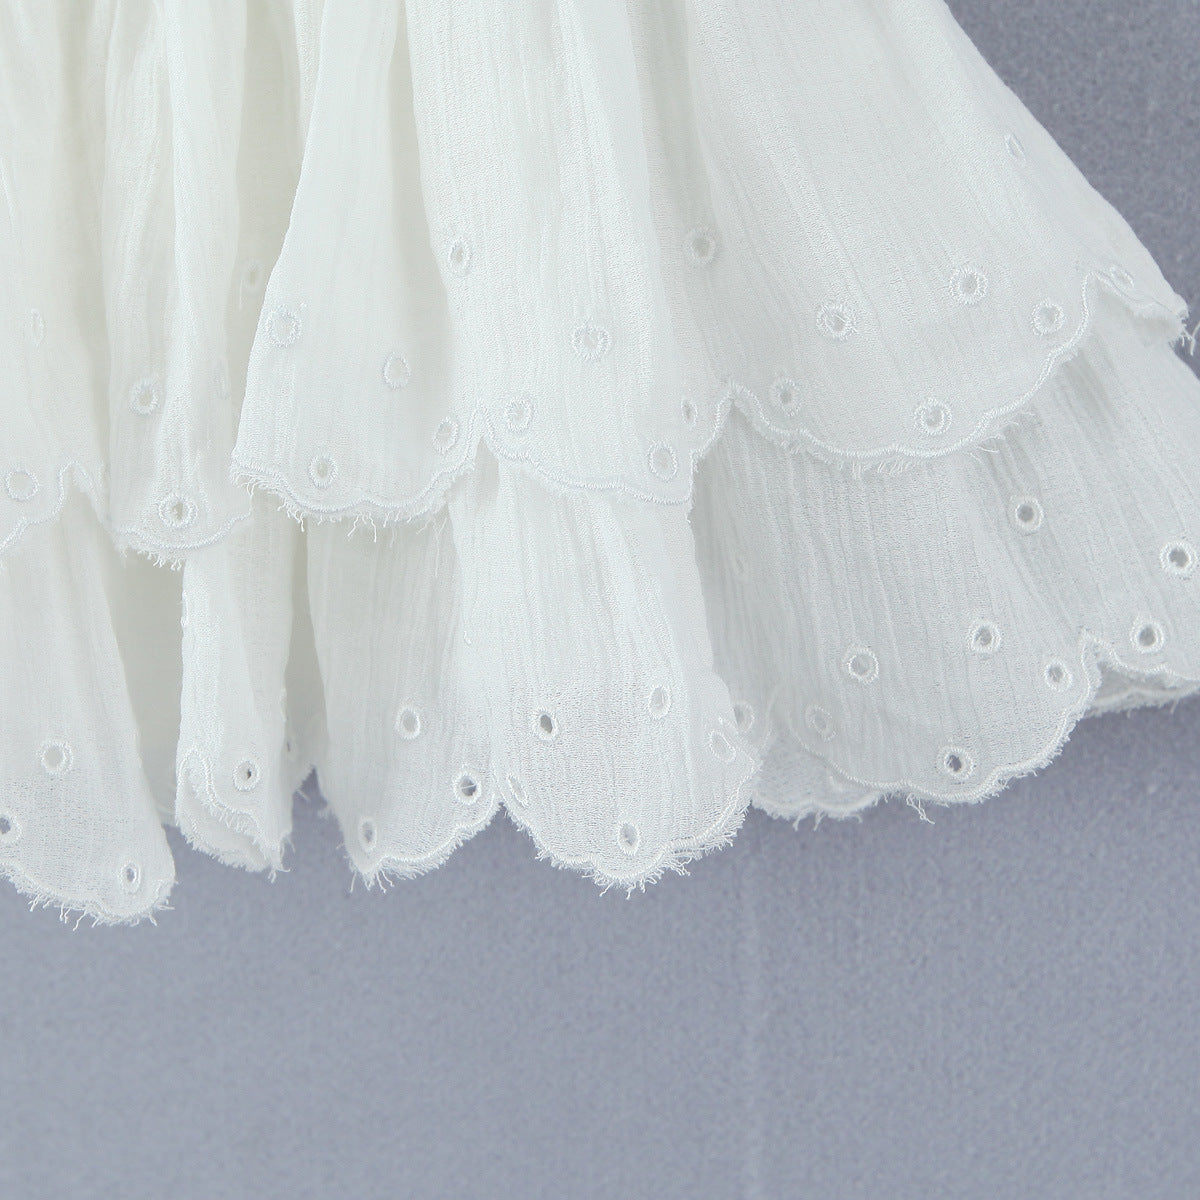 Ethereal Ballerina Layer Skirt